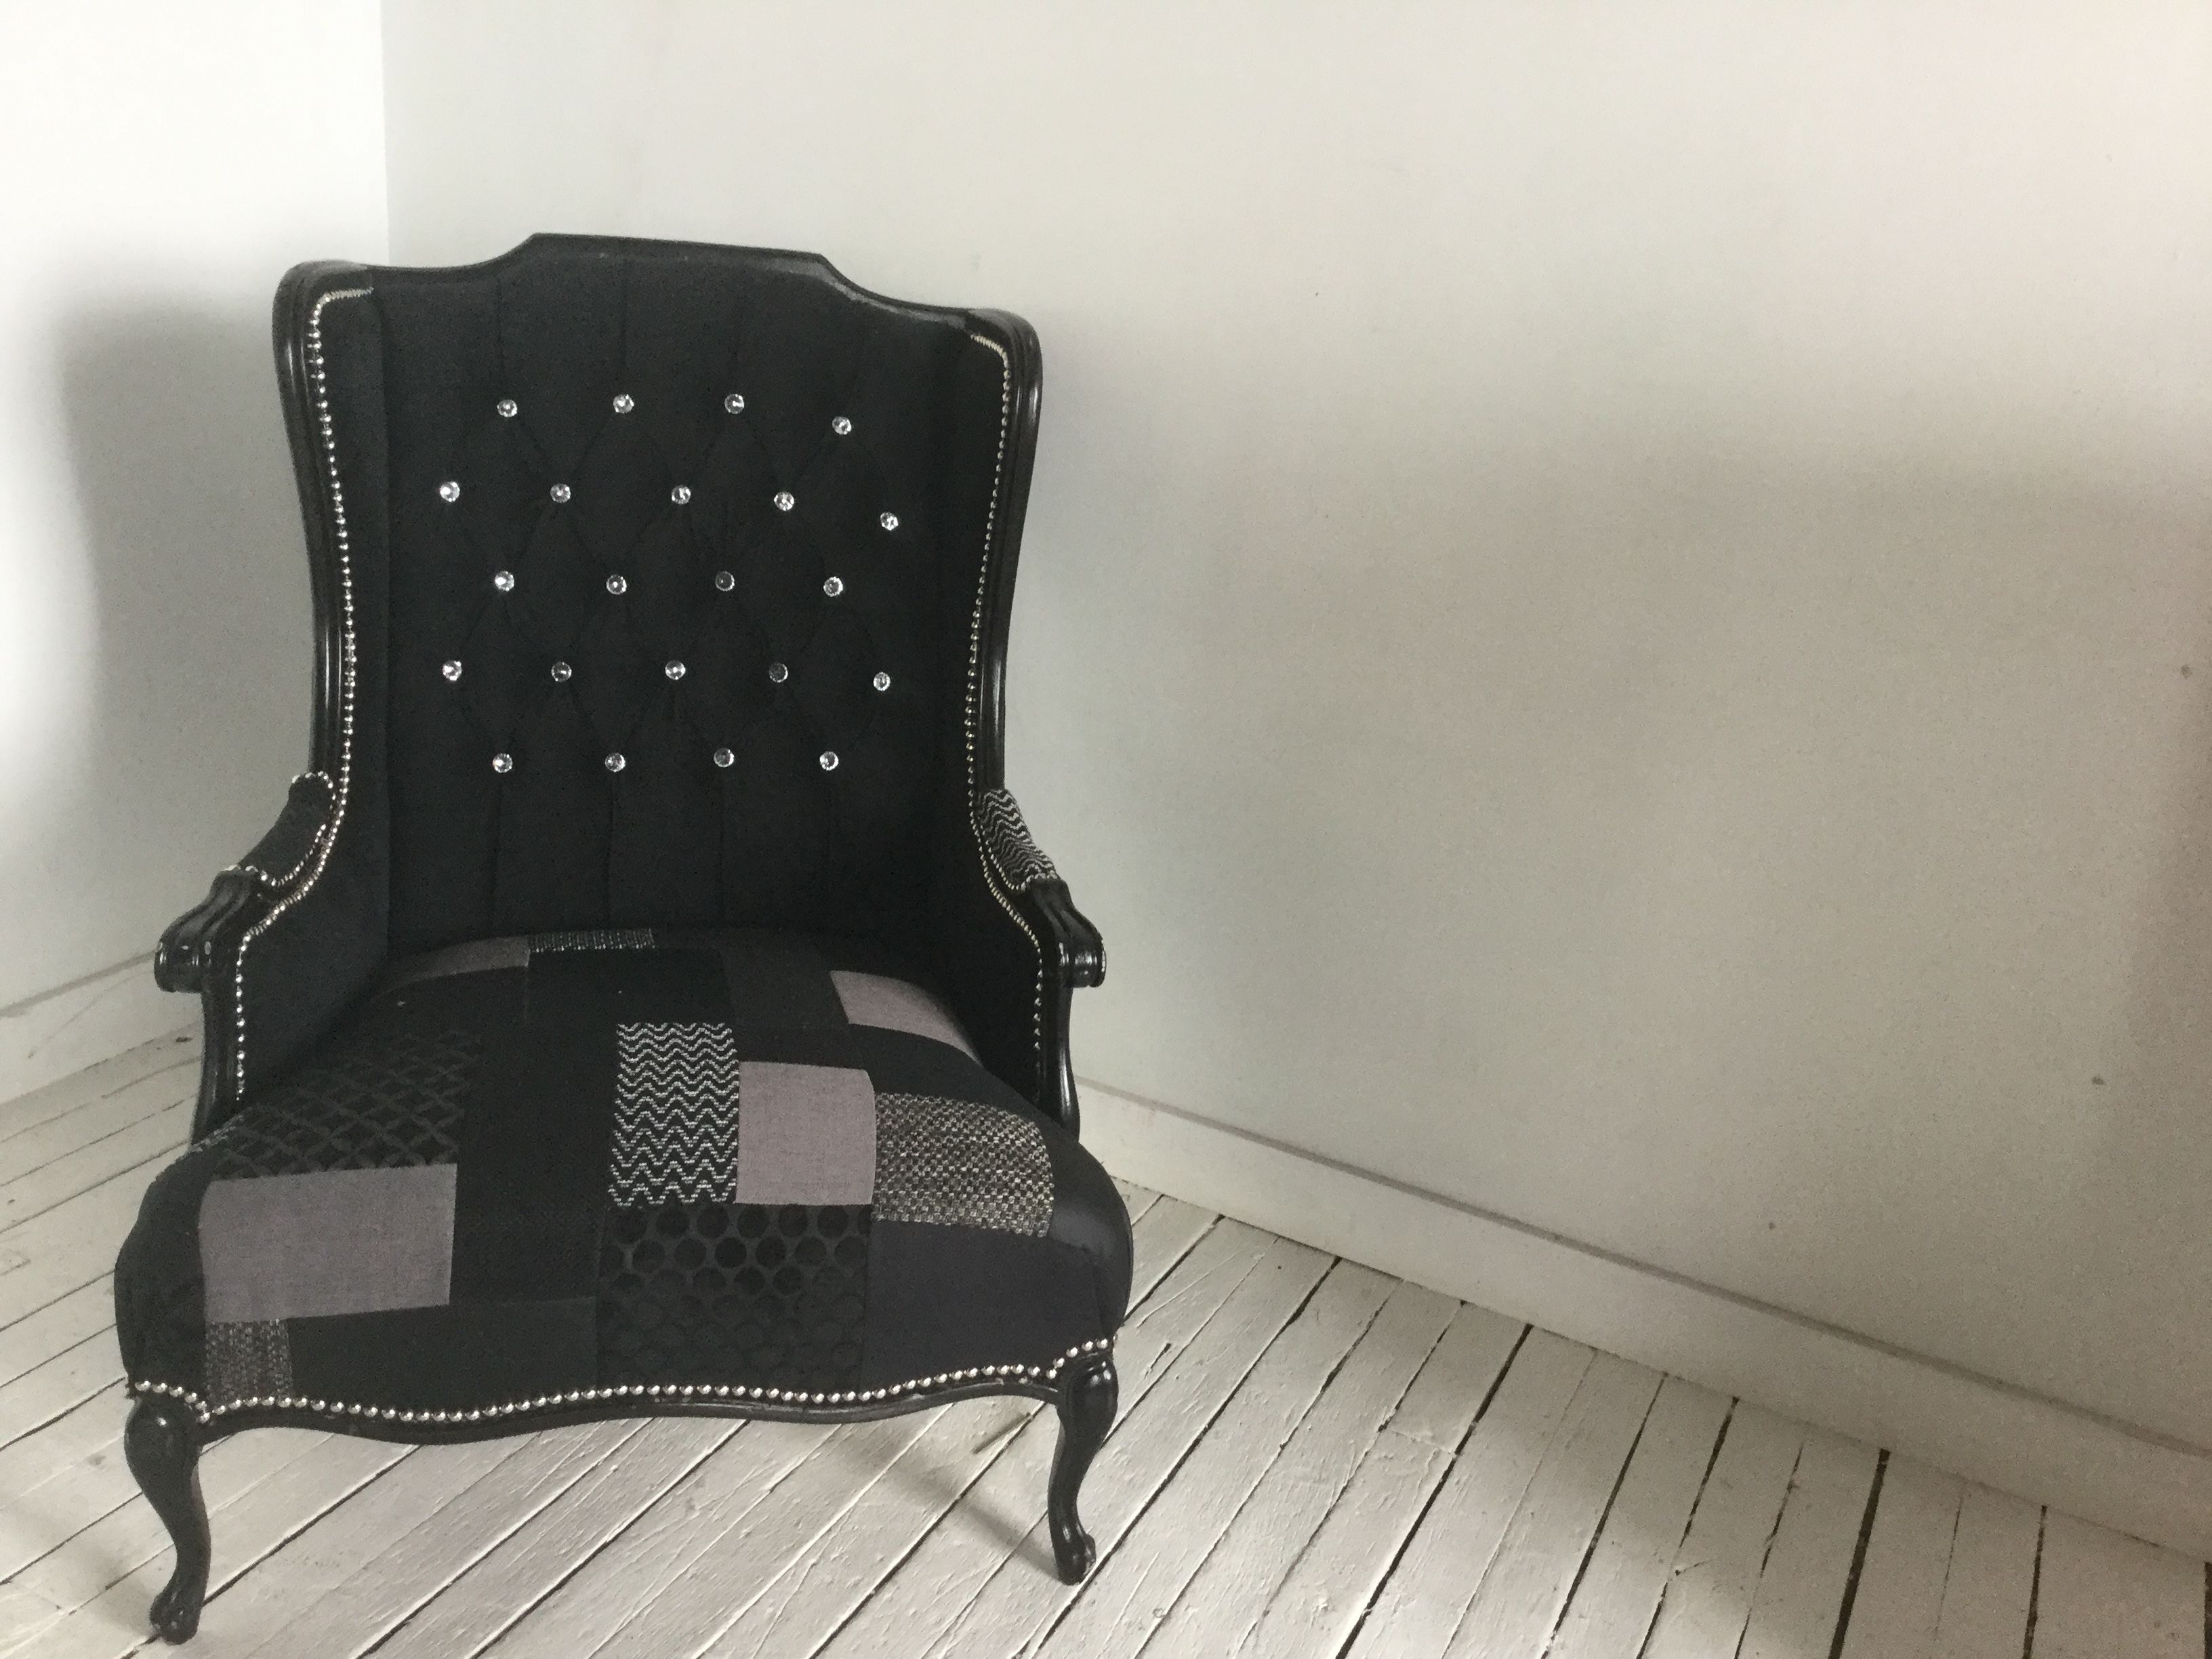 The Tim Burton Chair